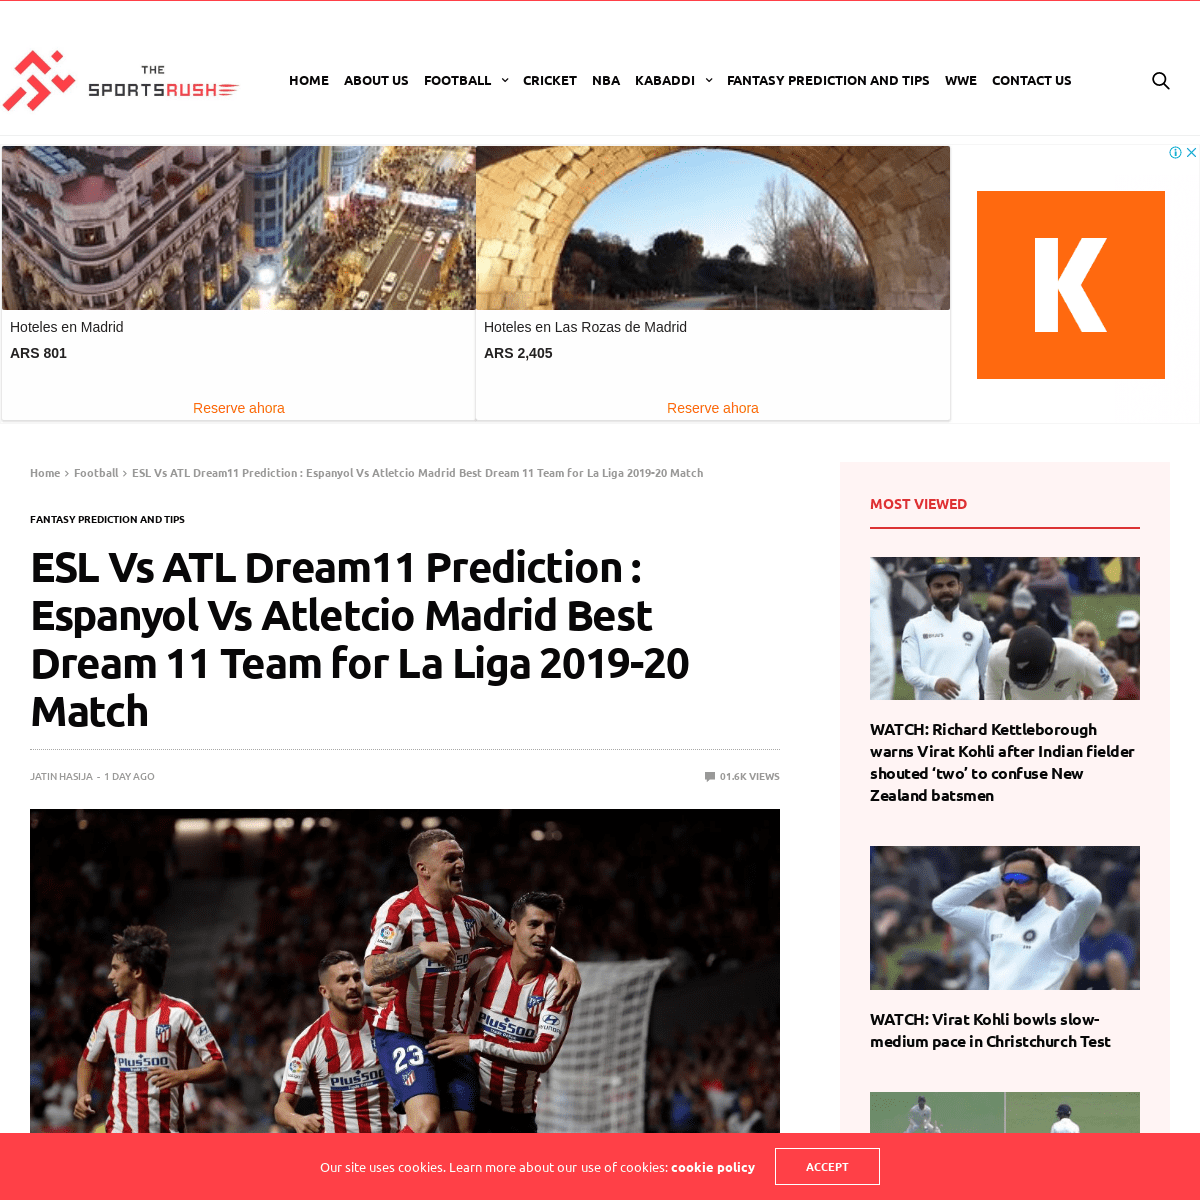 A complete backup of thesportsrush.com/esl-vs-atl-dream11-prediction-espanyol-vs-atletcio-madrid-best-dream-11-team-for-la-liga-